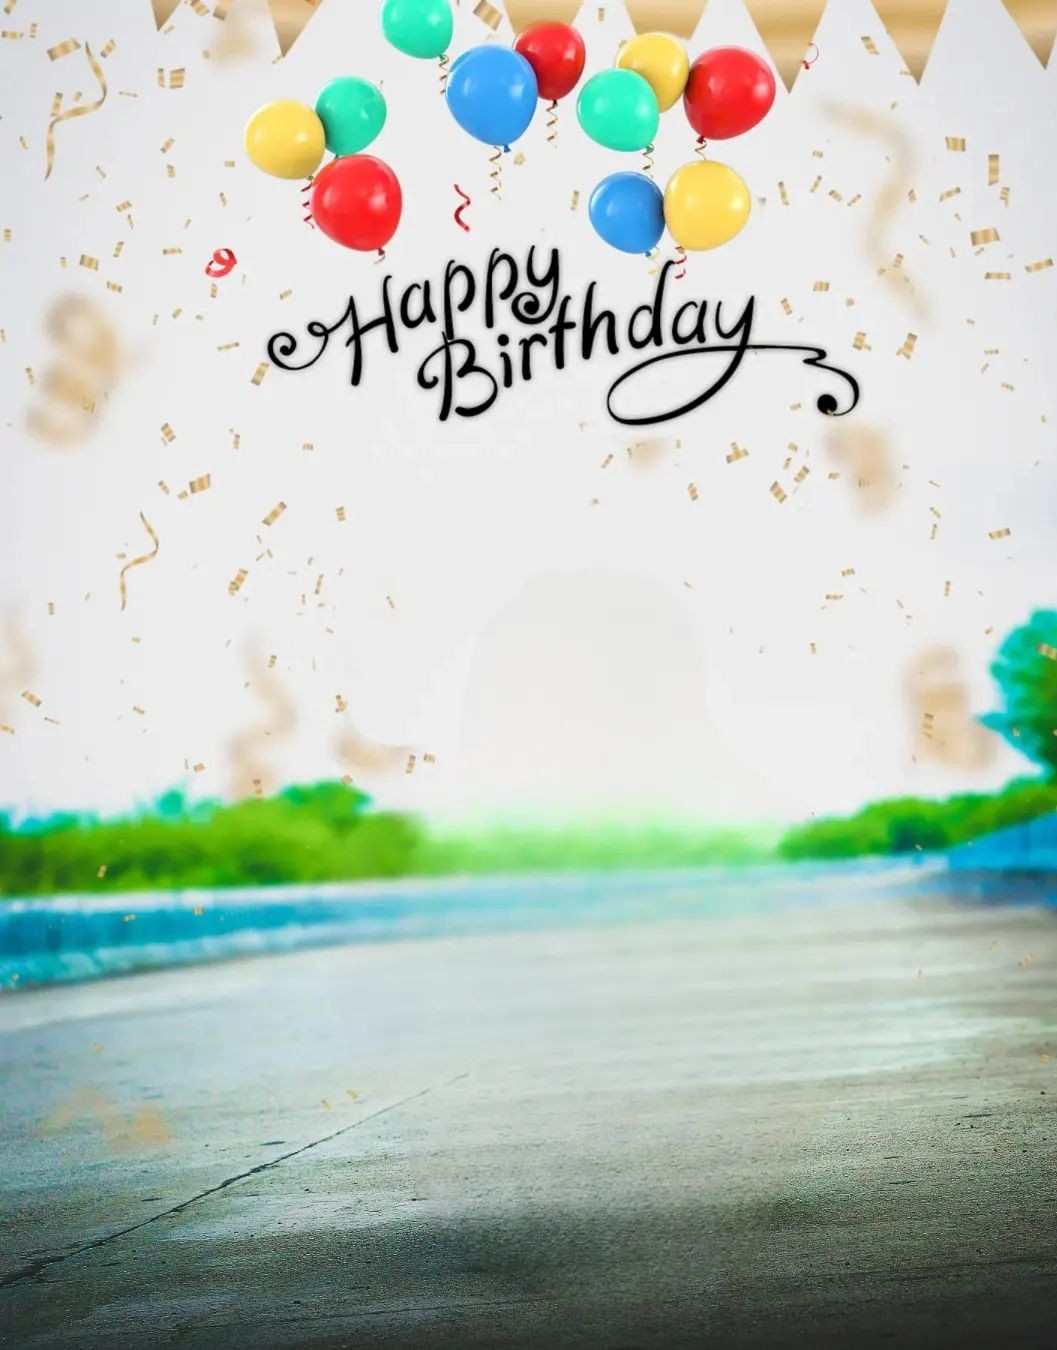 Happy birthday Editing Picsart Background 